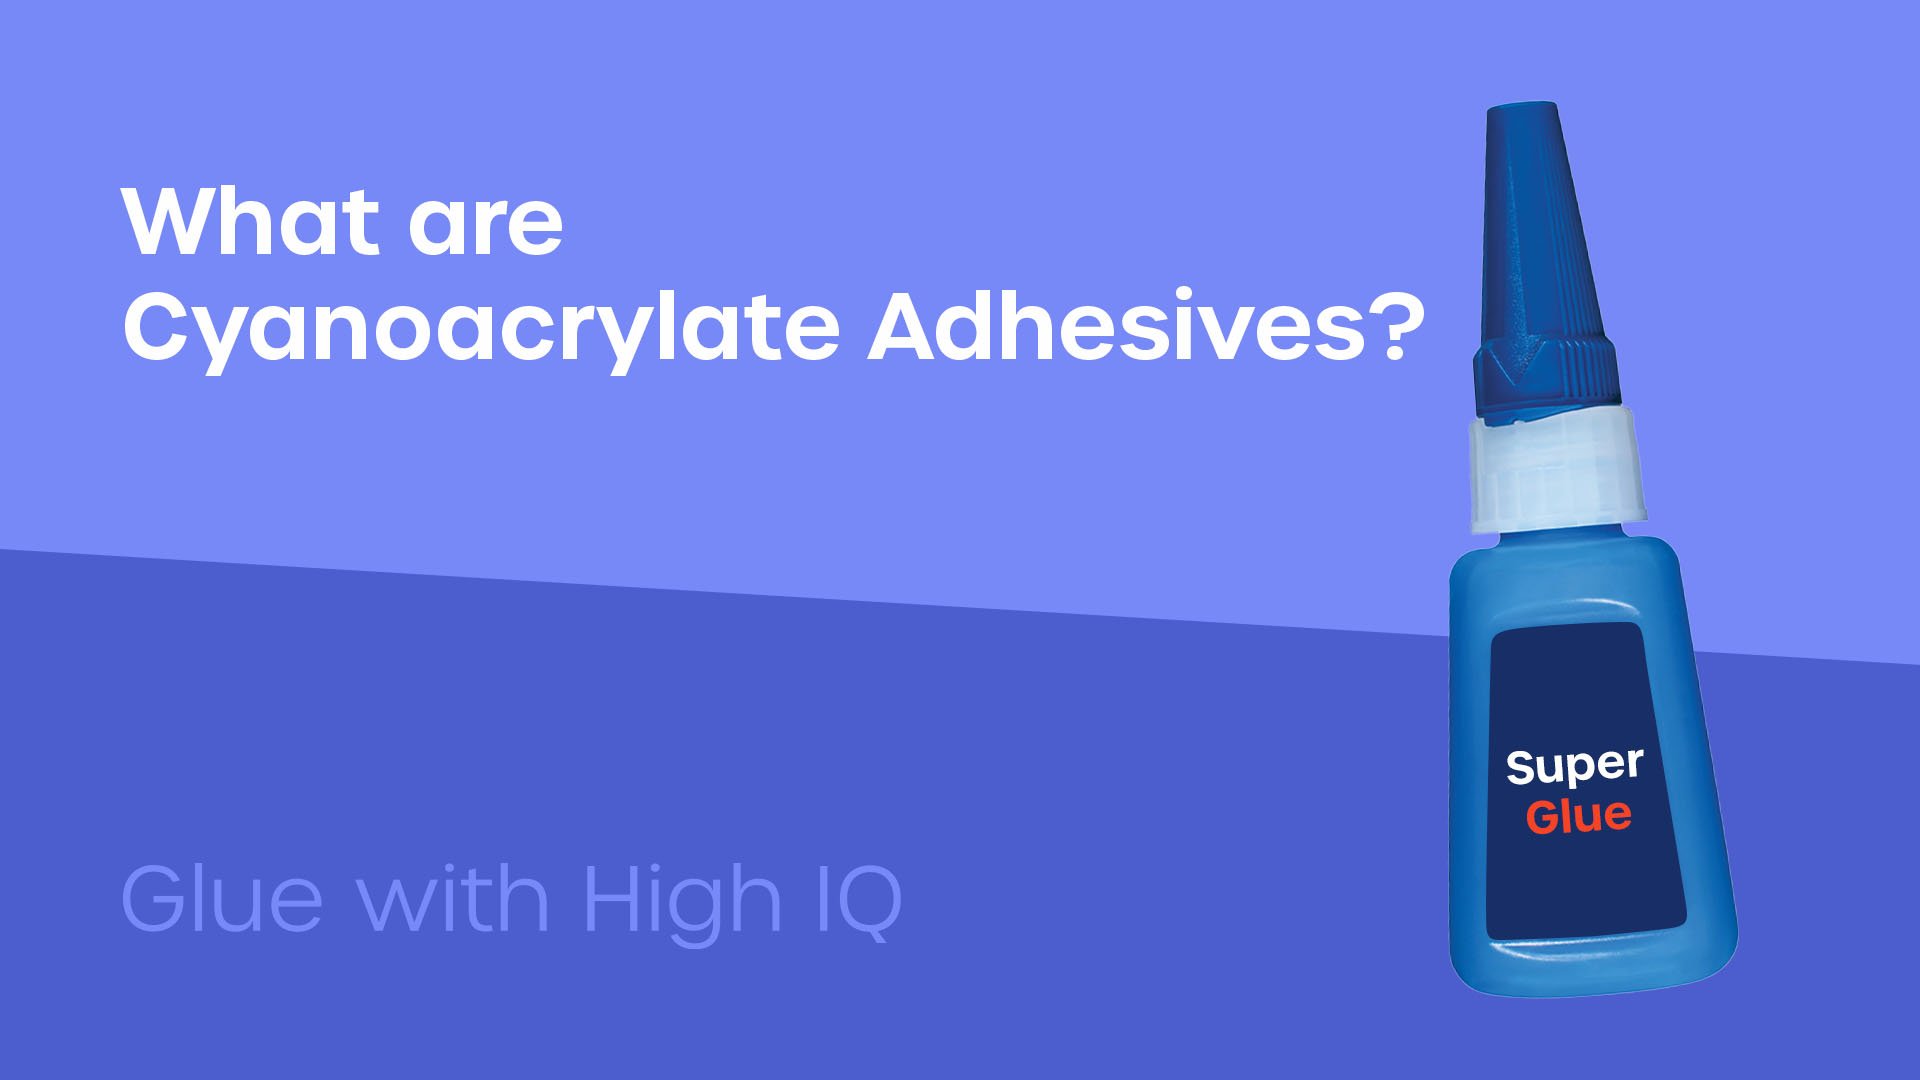 What is cyanoacrylate adhesive and super glue?